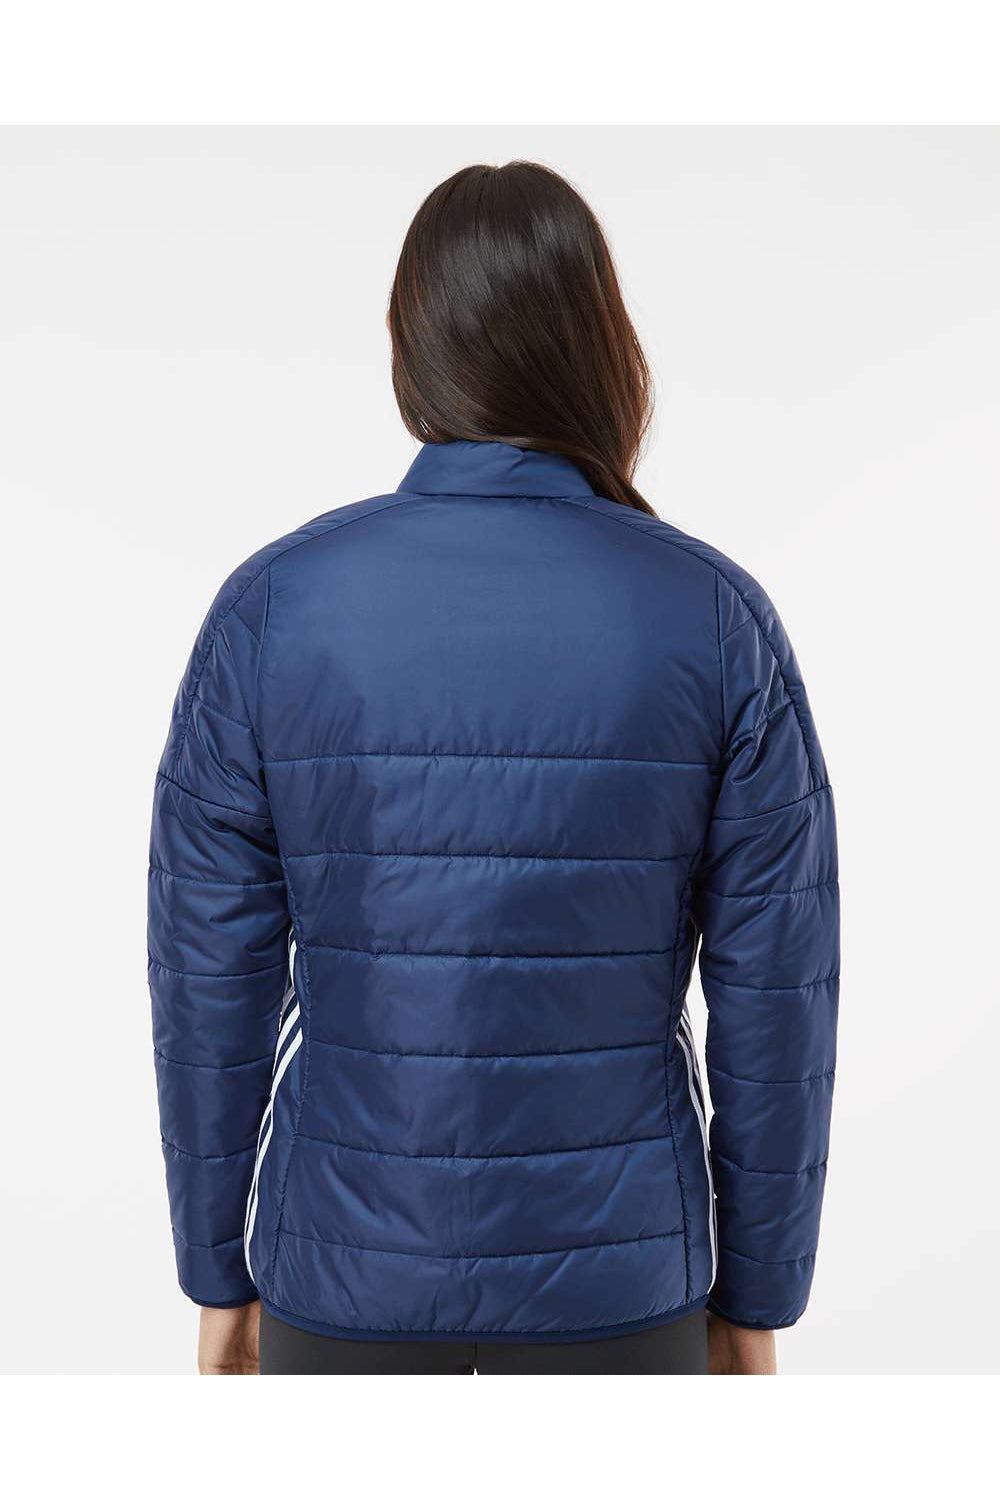 Adidas A571 Womens Full Zip Puffer Jacket Team Navy Blue Model Back